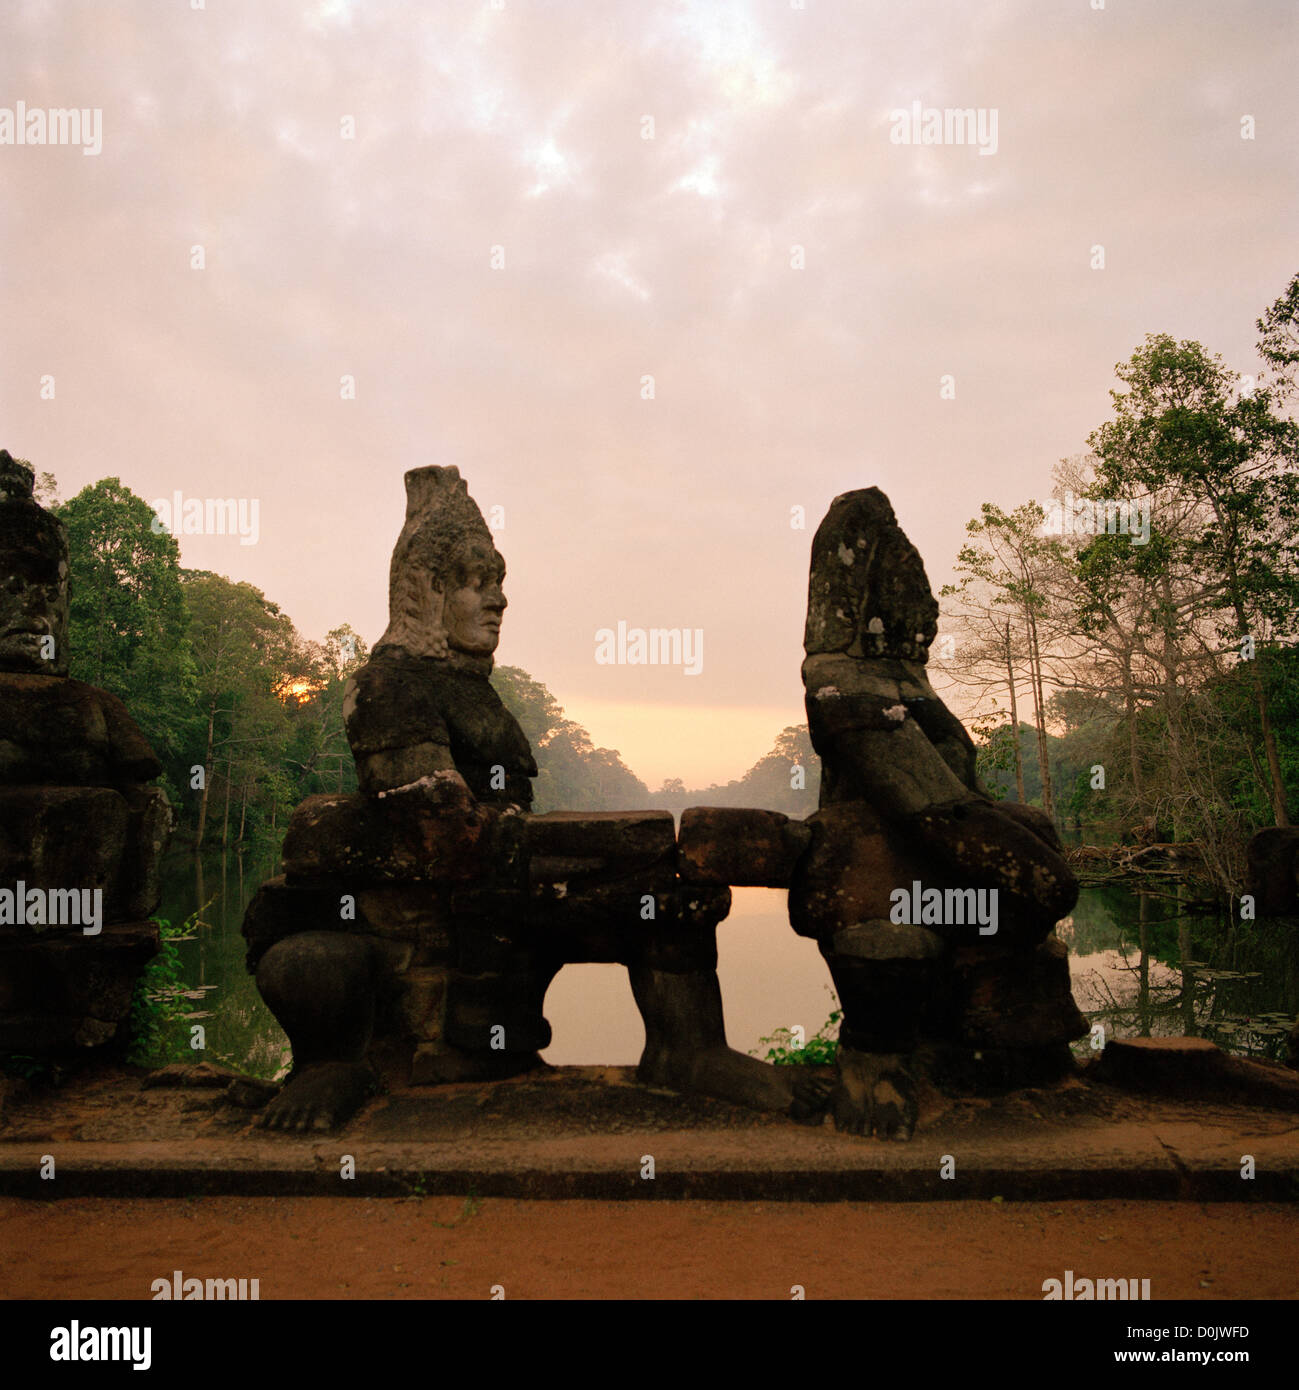 Khmer arte scultura gli dèi di Causeway a South Gate a Angkor Thom dei templi di Angkor a Siem Reap in Cambogia nel sud-est asiatico. Viaggiare Foto Stock